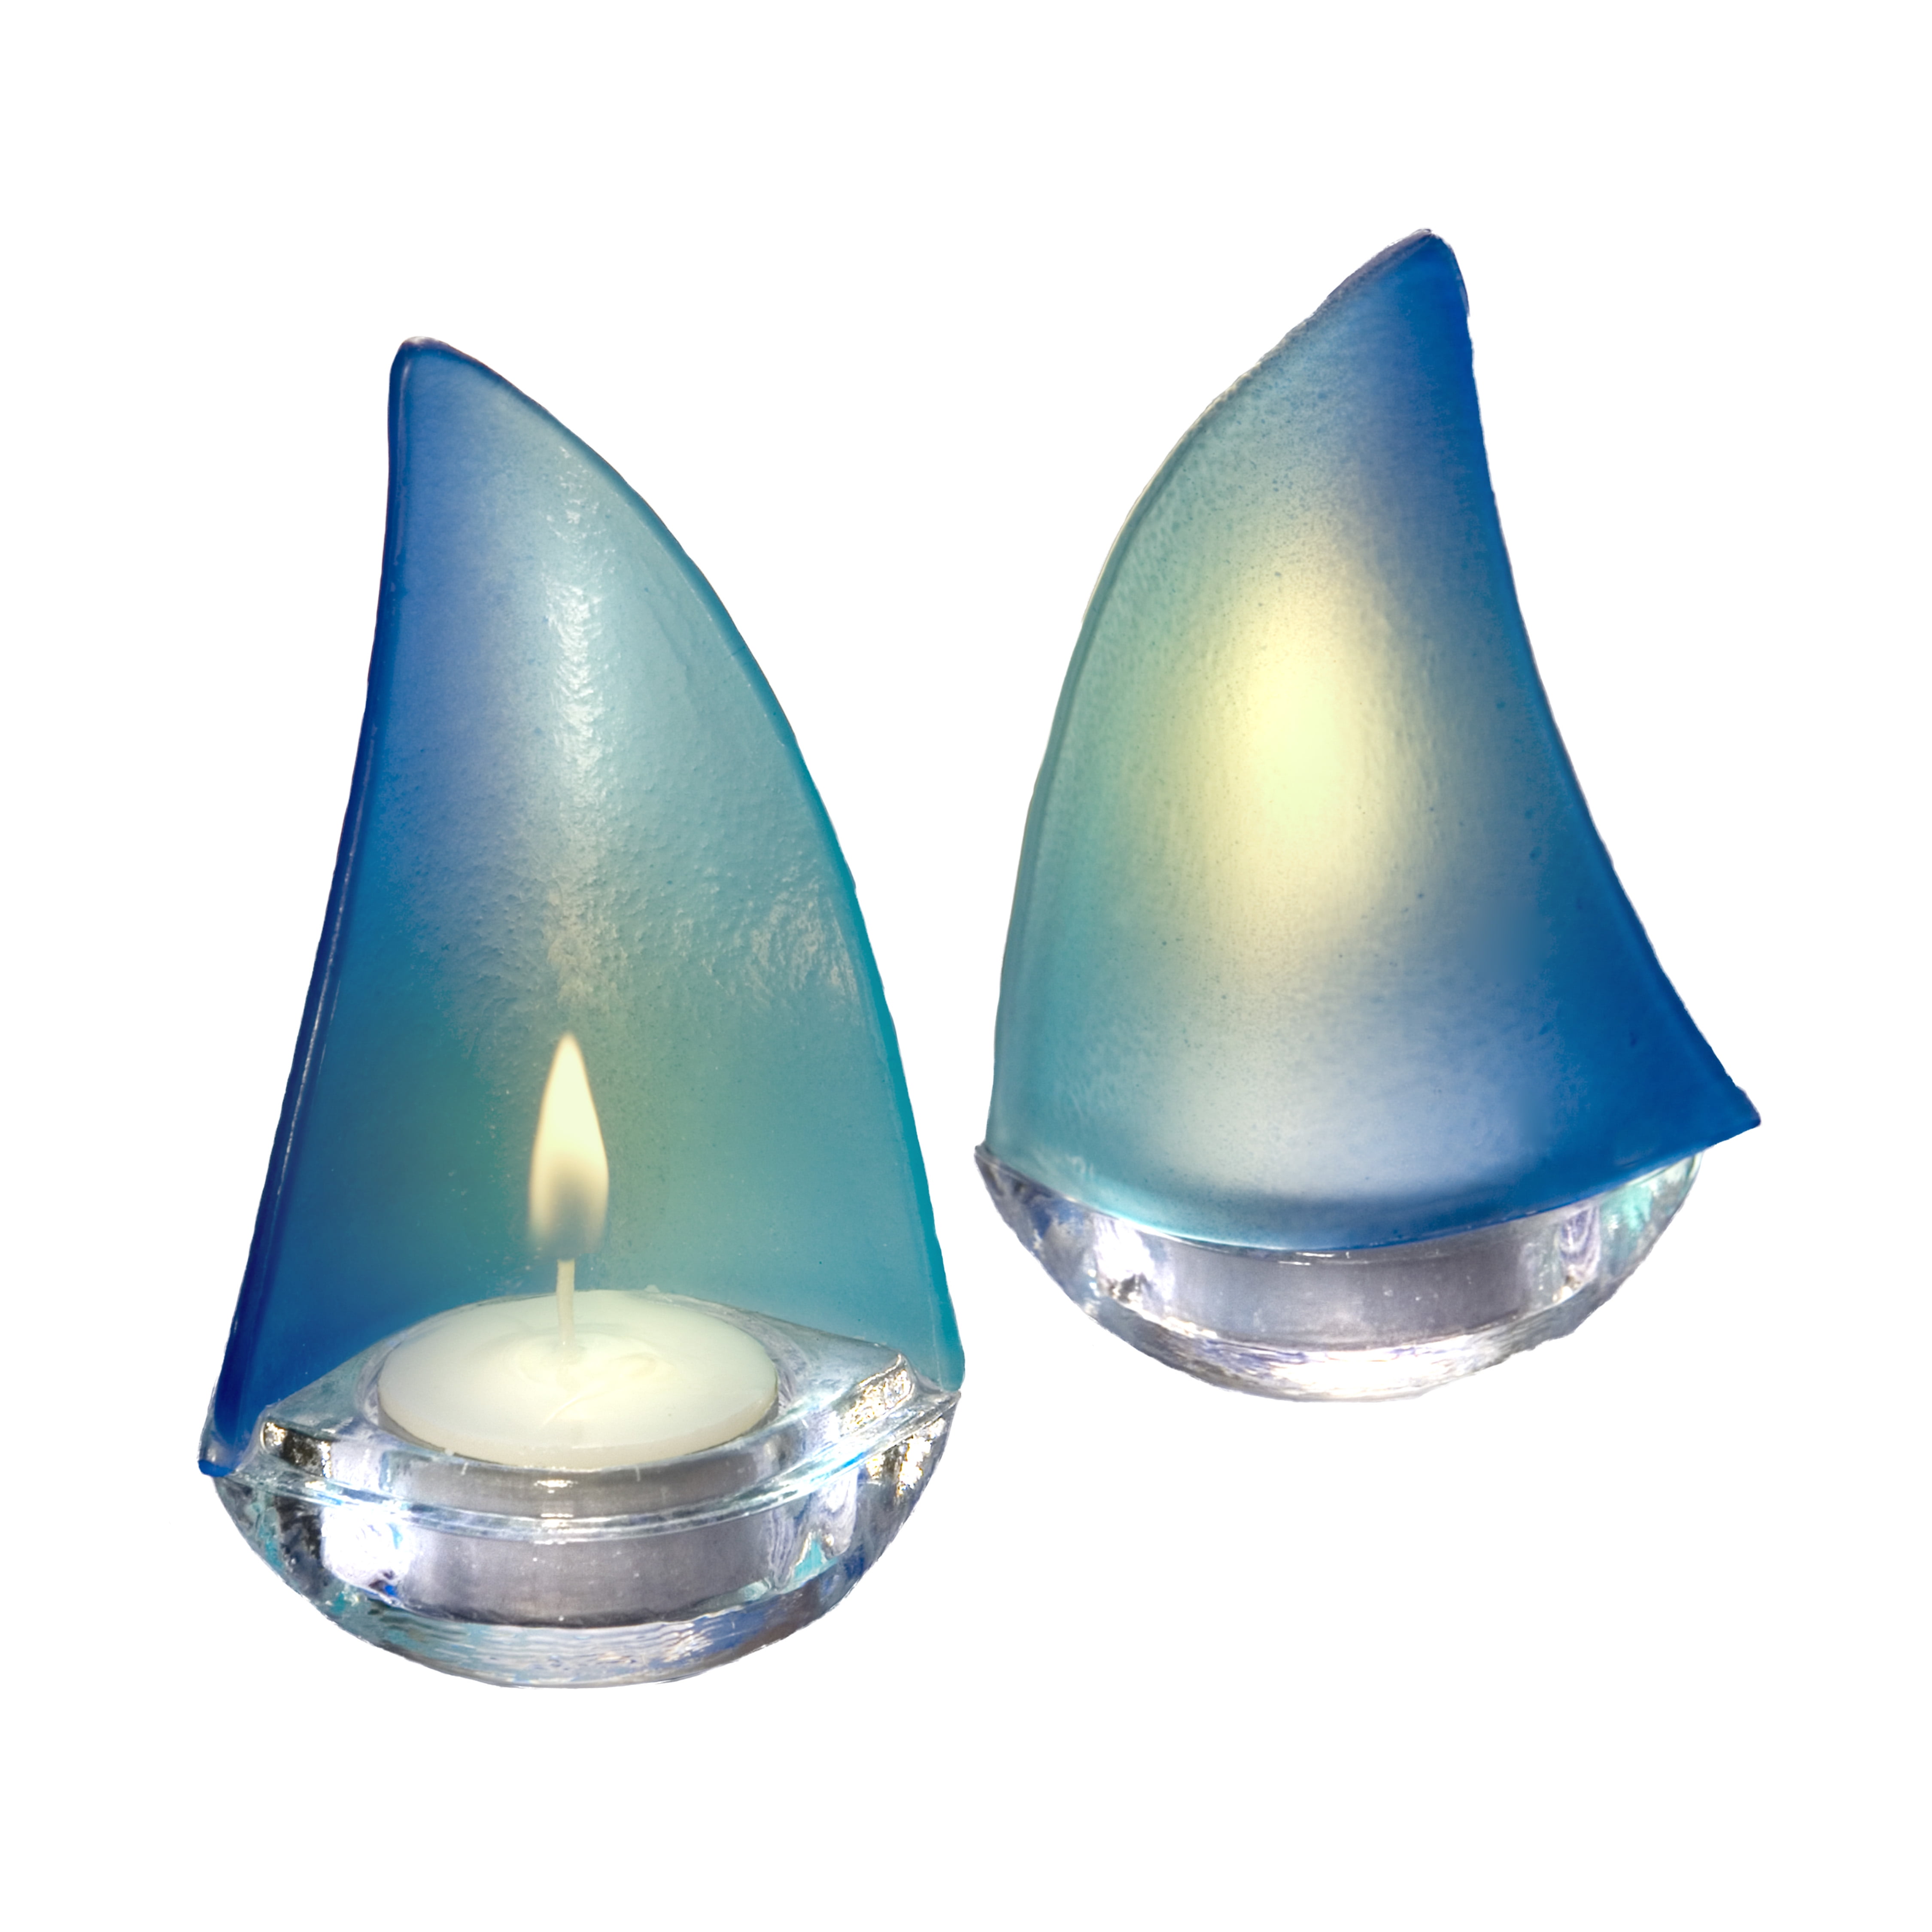 Fashioncraft Blue Frosted Glass Stylish Sailboat Votive Tea Light Candle Holders Set of 2 